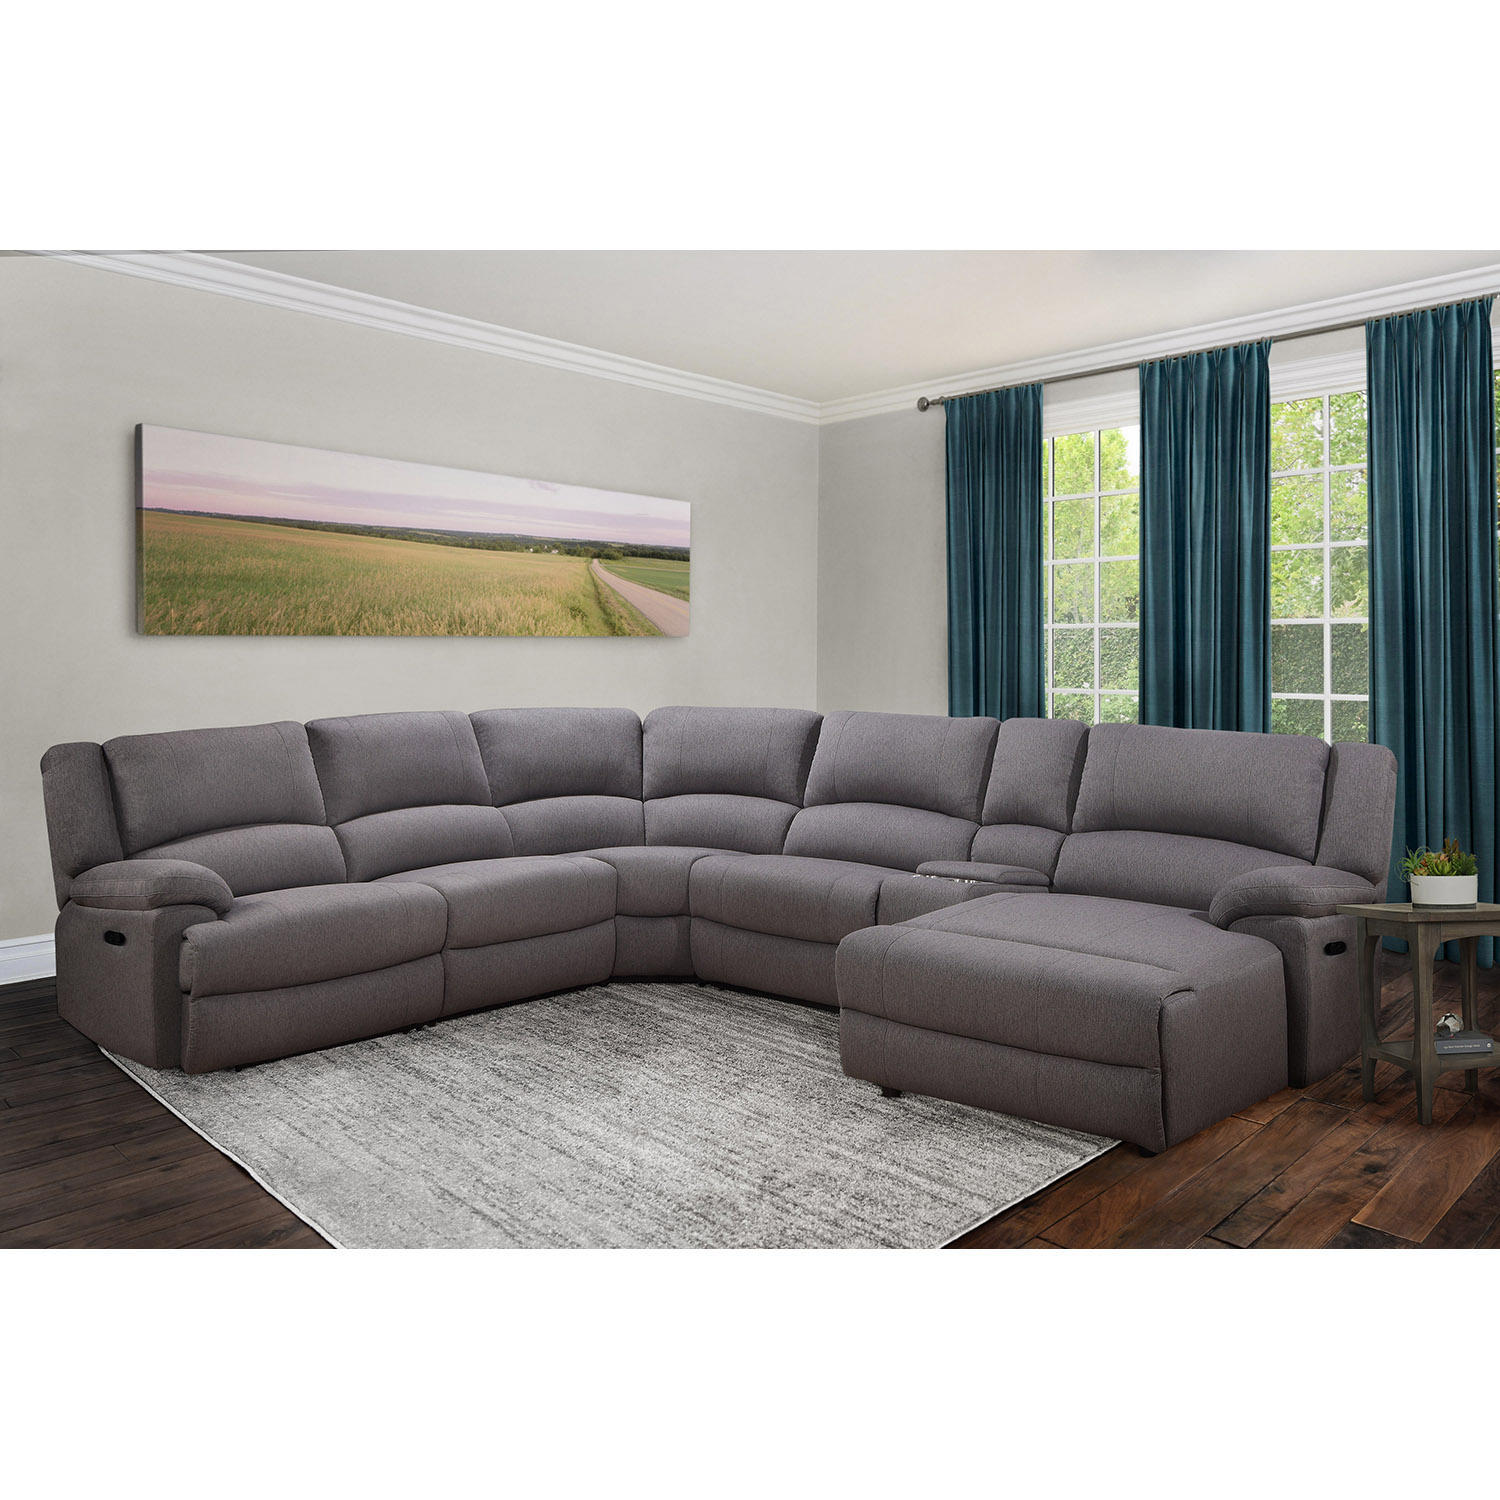 Abbyson Living Kensington 6-Piece Fabric Reclining Sectional Sofa